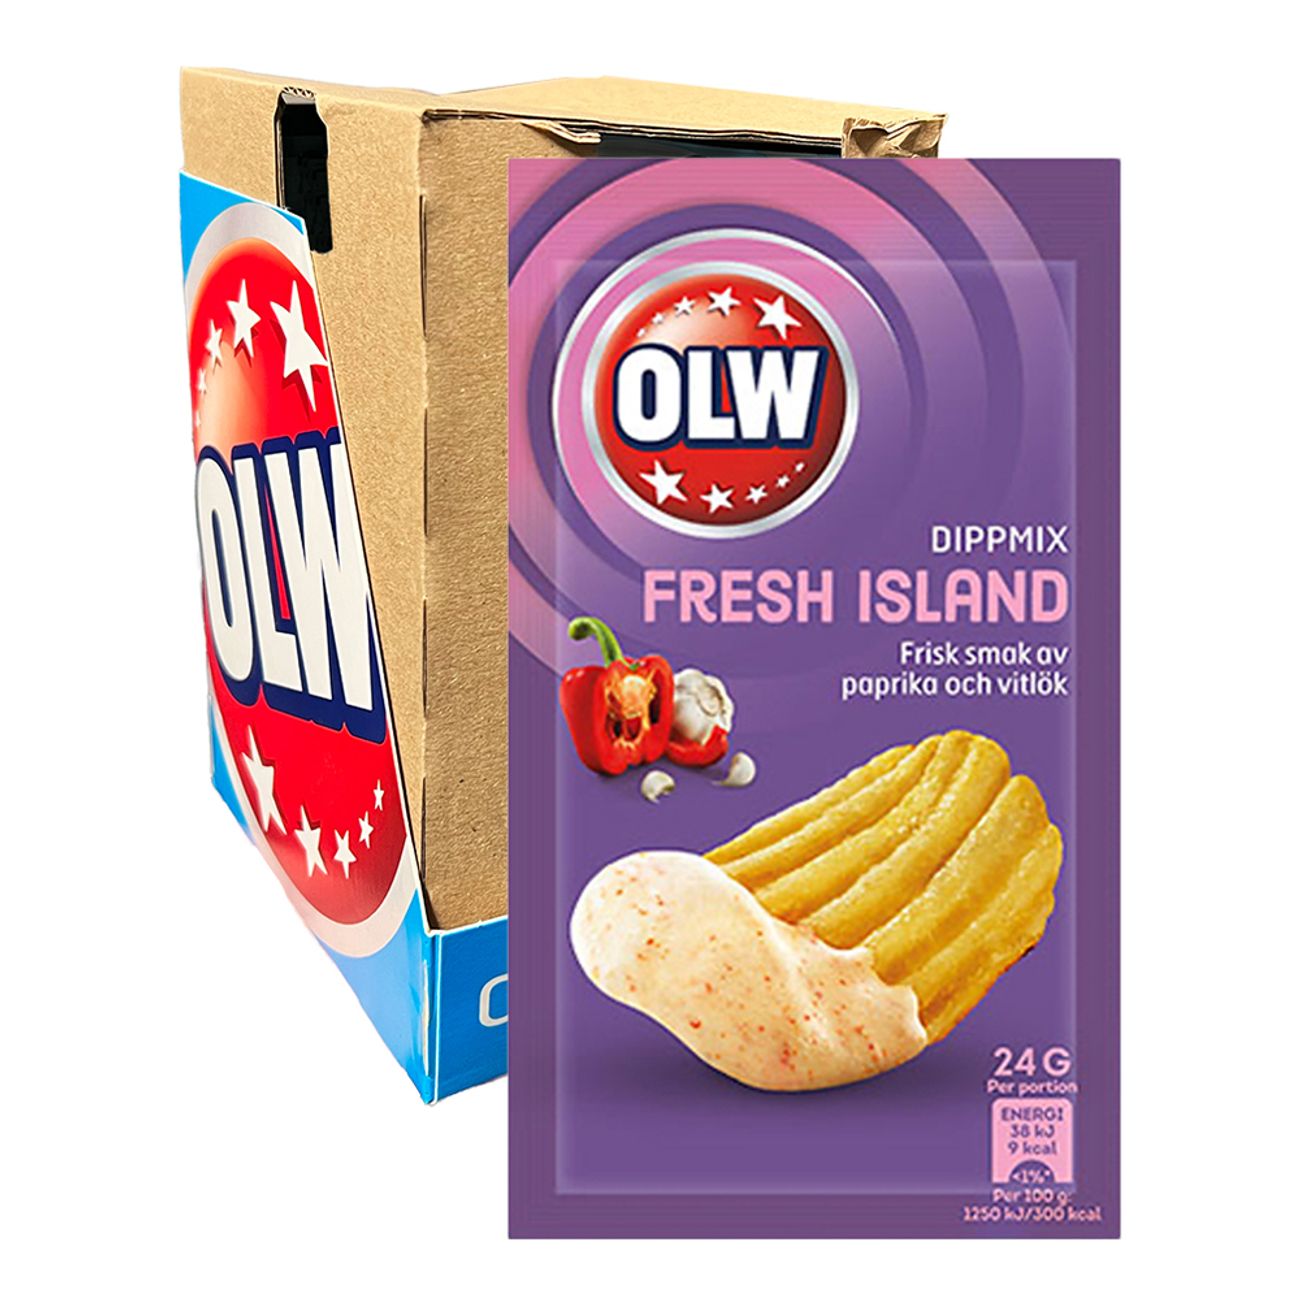 olw-dippmix-fresh-island-storpack-59170-3